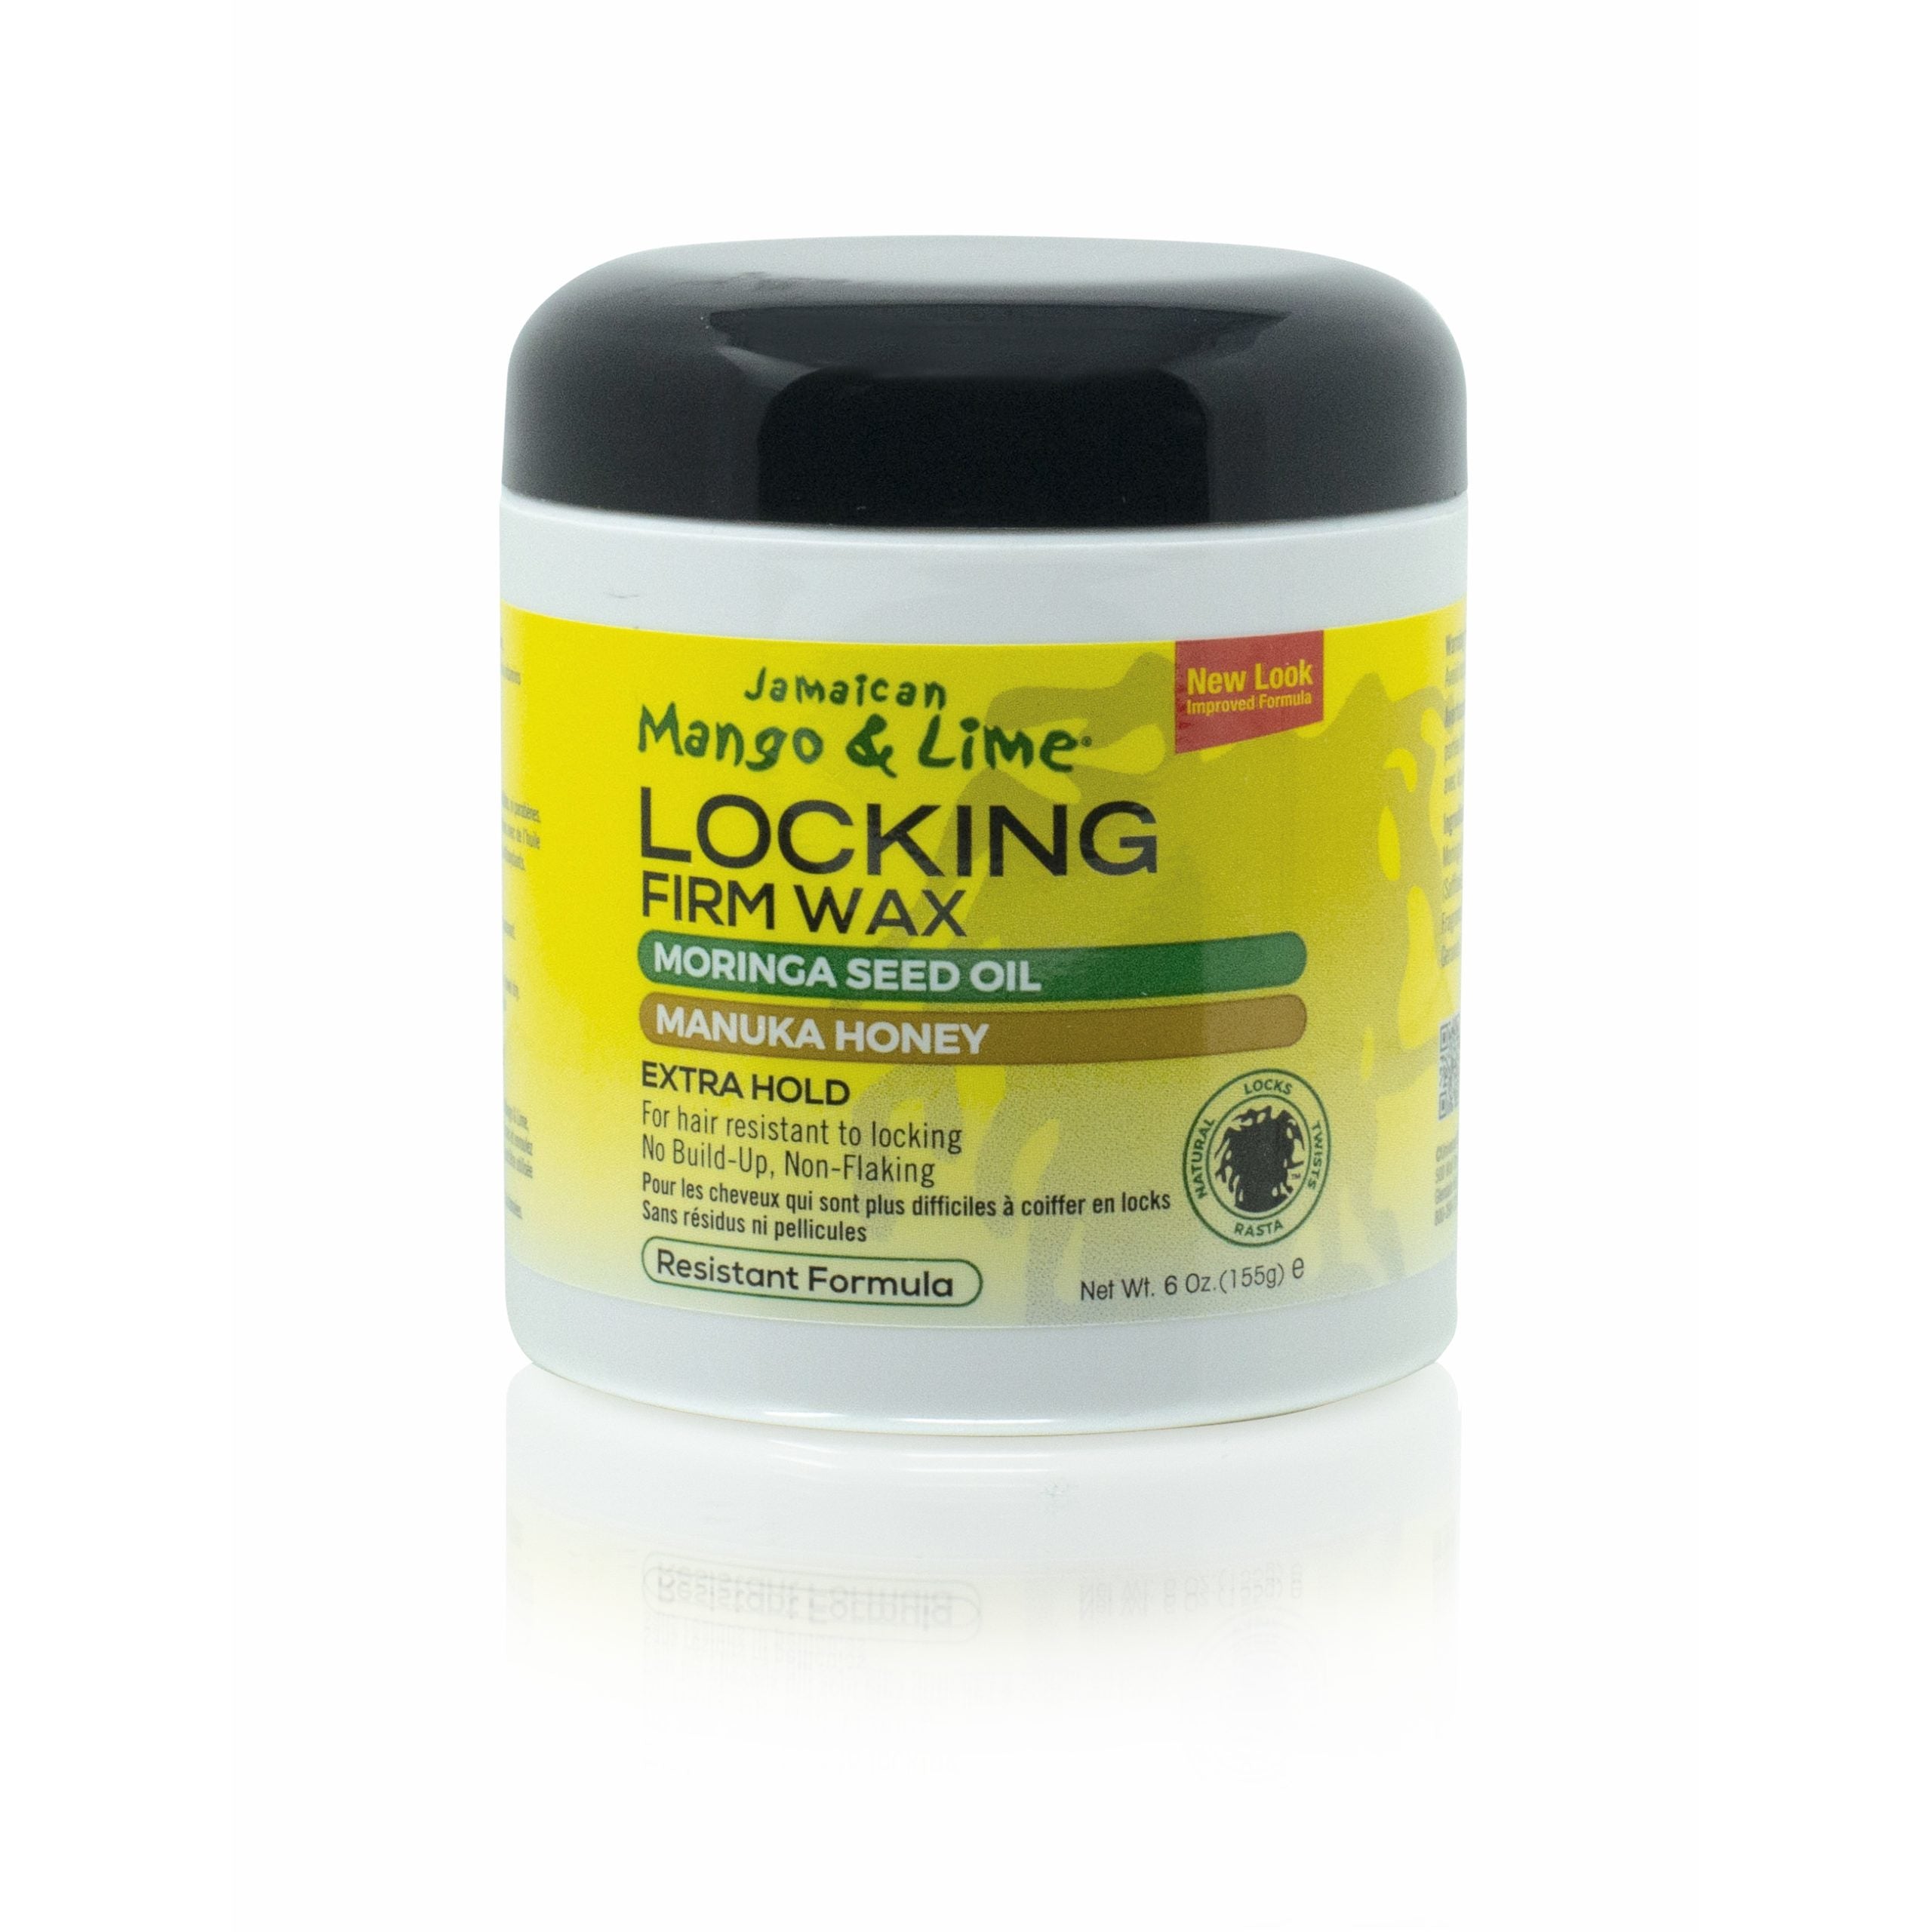 Jamaican Mango & Lime- Locking Firm Wax 6 oz